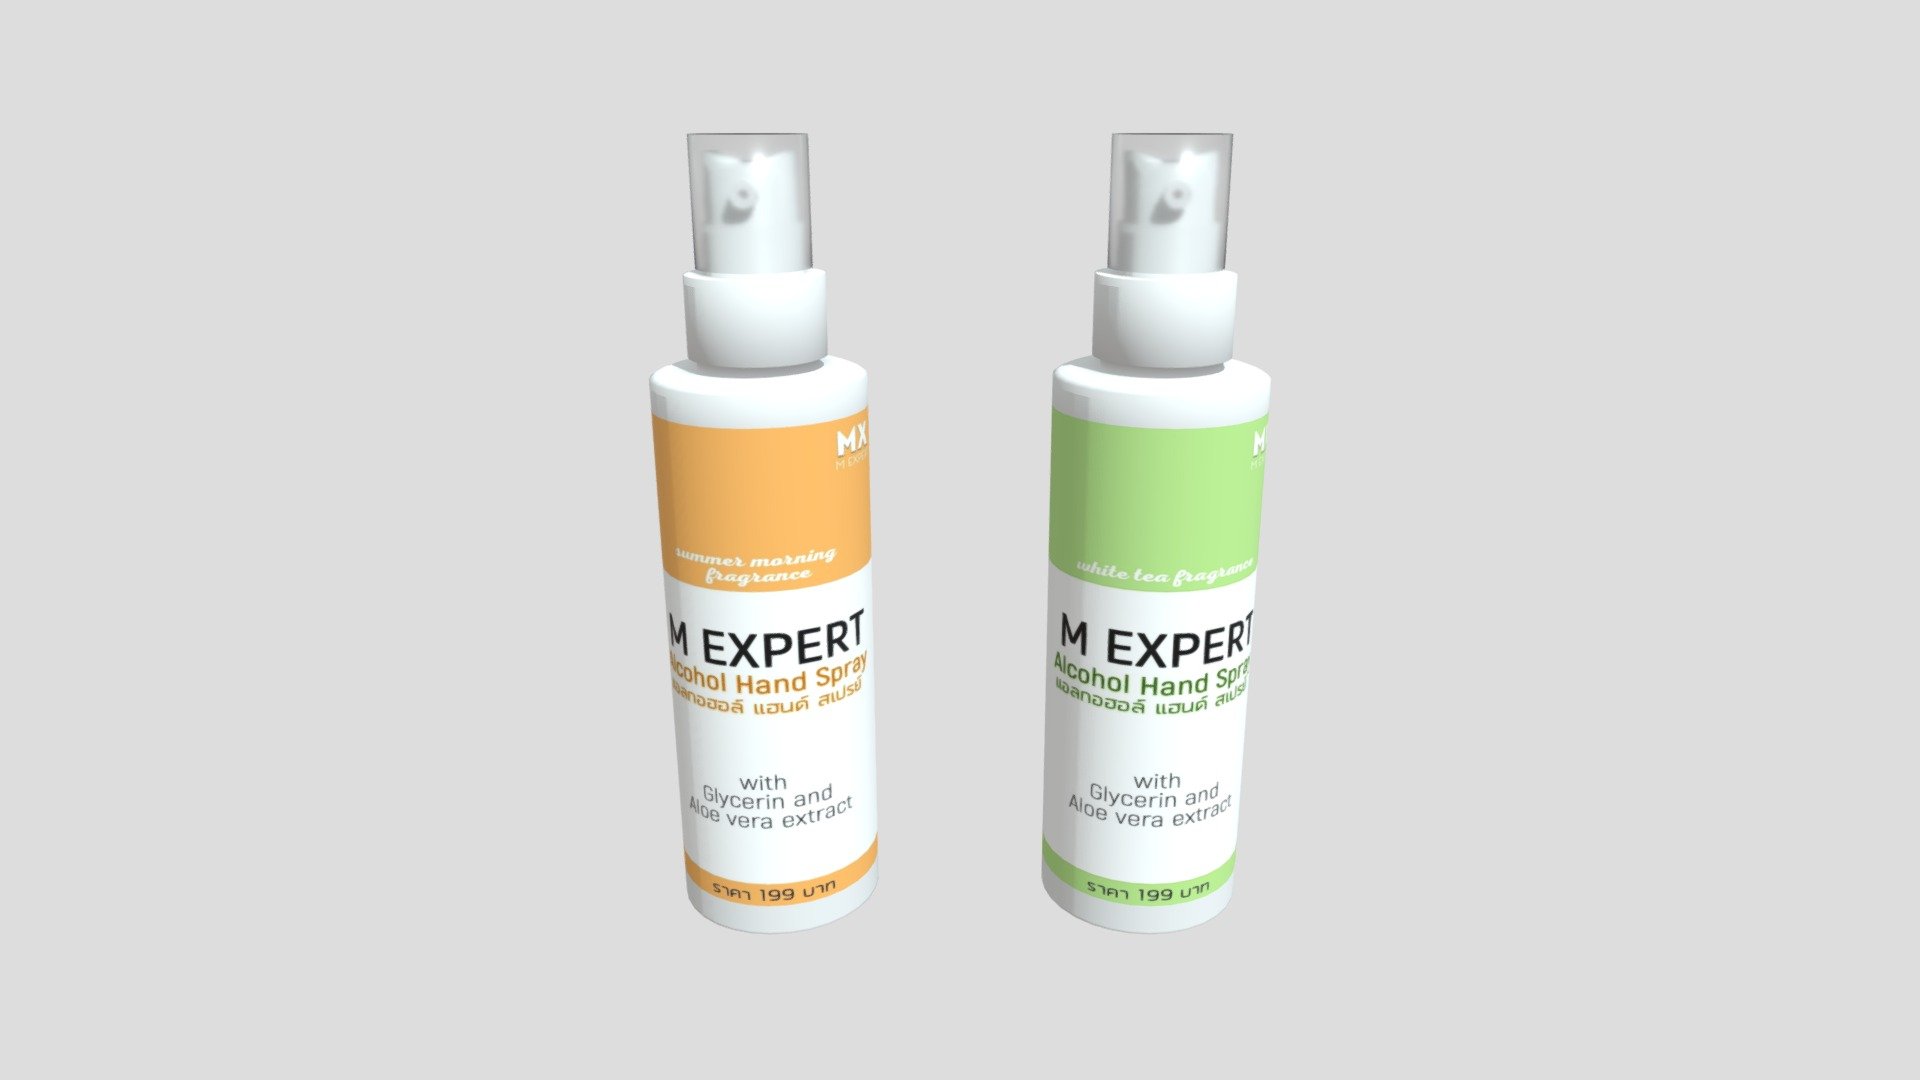 M EXPERT-Alcohol Spray : White tea, Fragrance - M EXPERT-Alcohol Spray : White tea, Fragrance - 3D model by Worapong (@mumtpr) 3d model